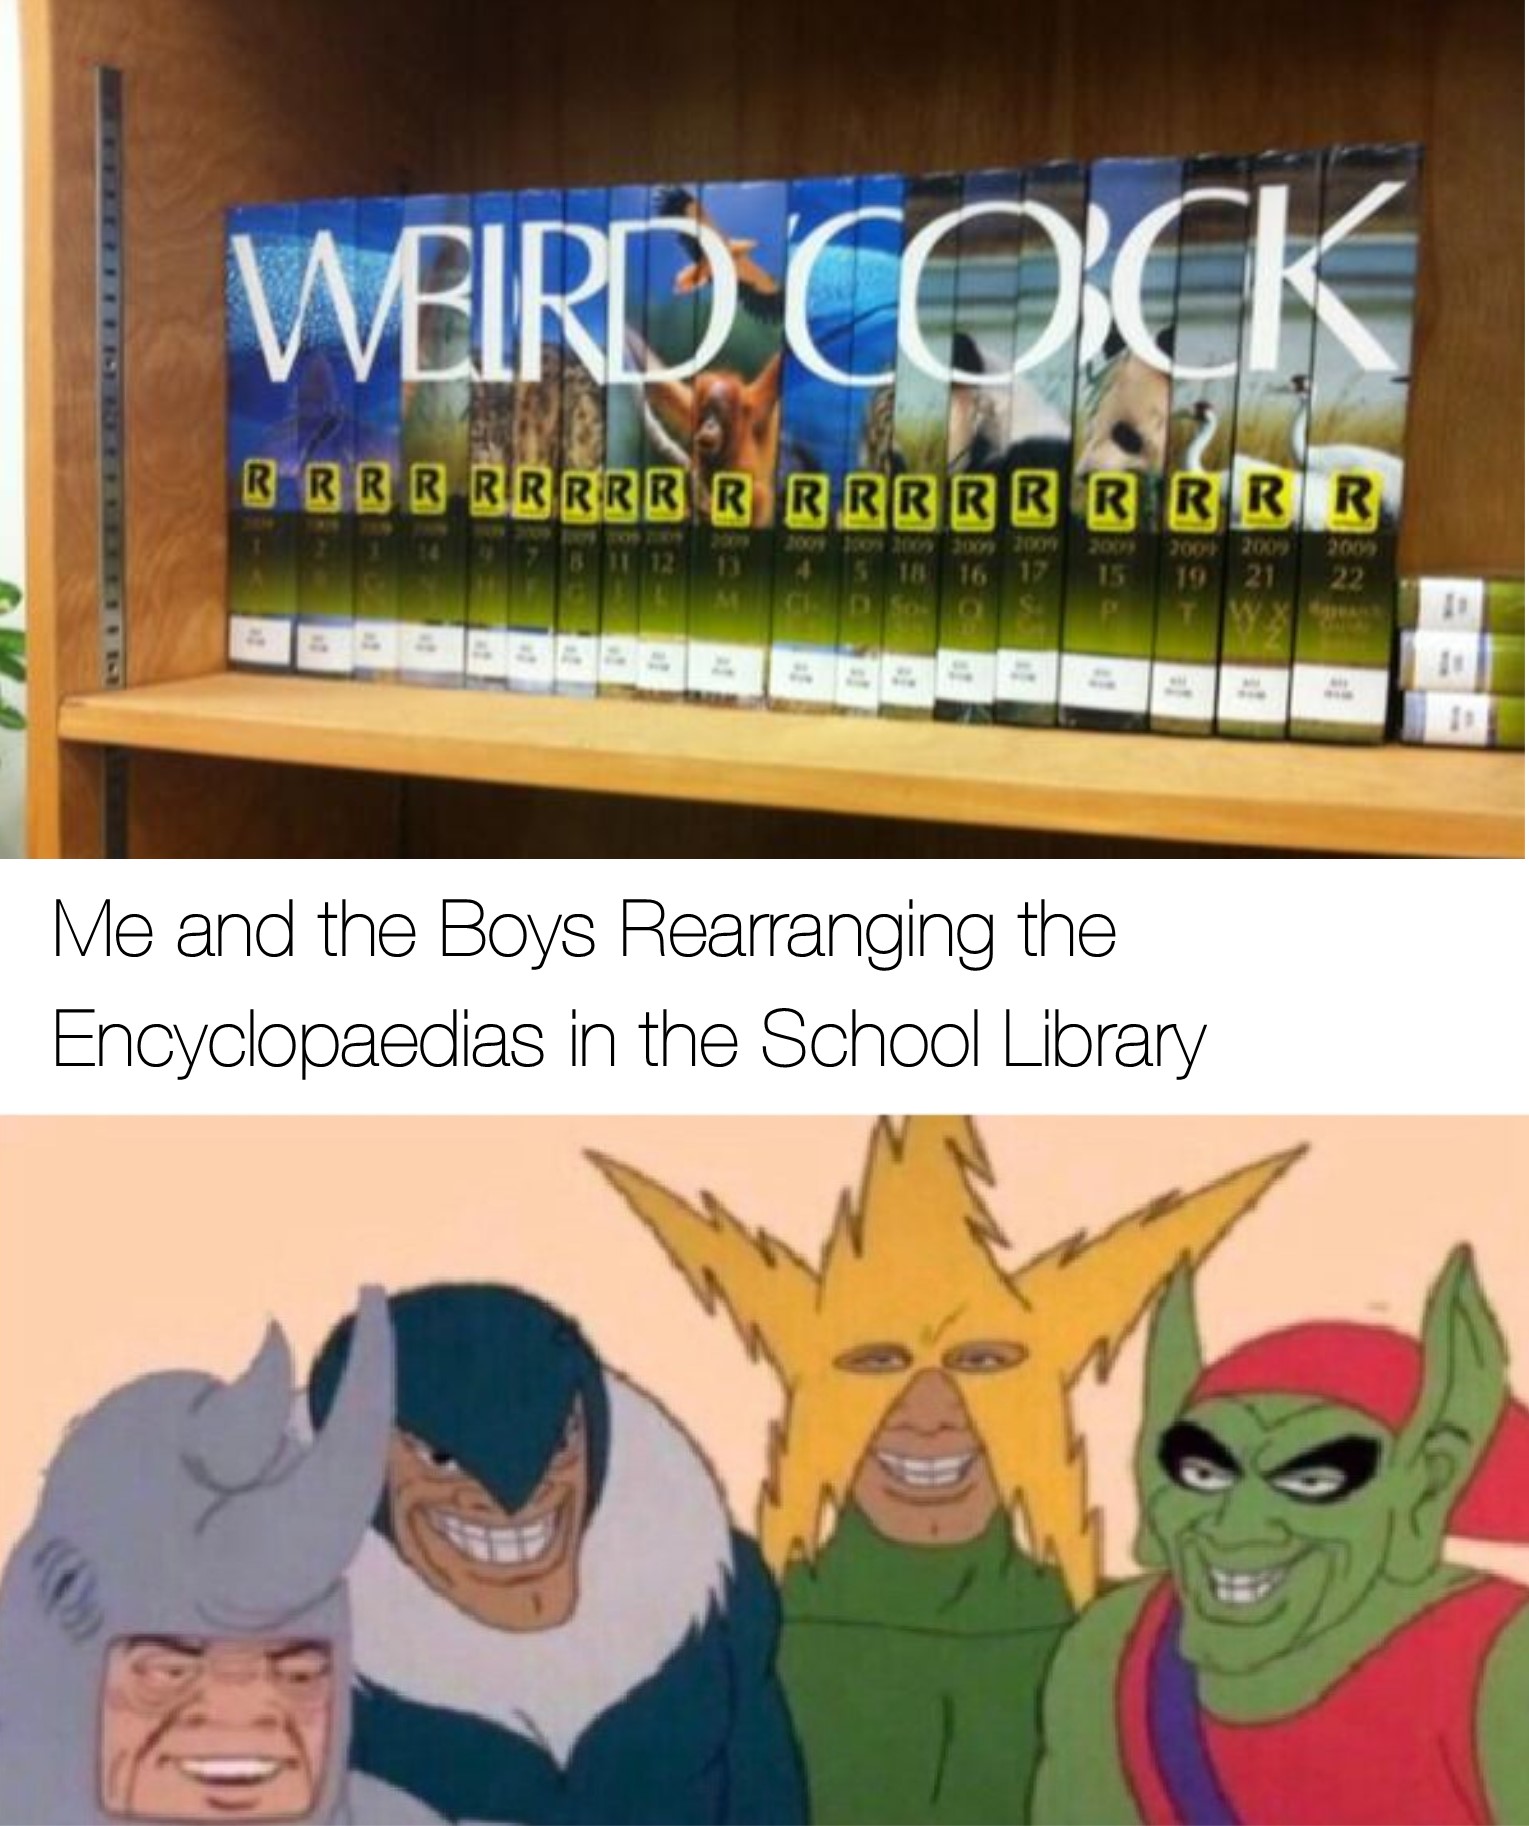 Me and the boys meme -  Internet meme - Weird Cock Aberrrrrr & Brrrrrrrr 2007 2004 21 22 Me and the Boys Rearranging the Encyclopaedias in the School Library